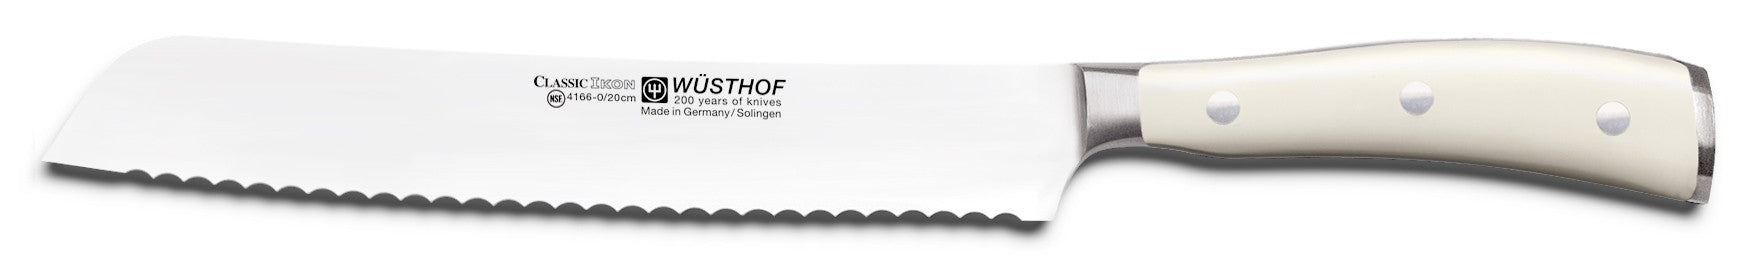 Wusthof Classic IKON Bread Knife, 8-inch (20 cm), Serrated, Creme - 4166-6/20 - OLD LOGO/BOX